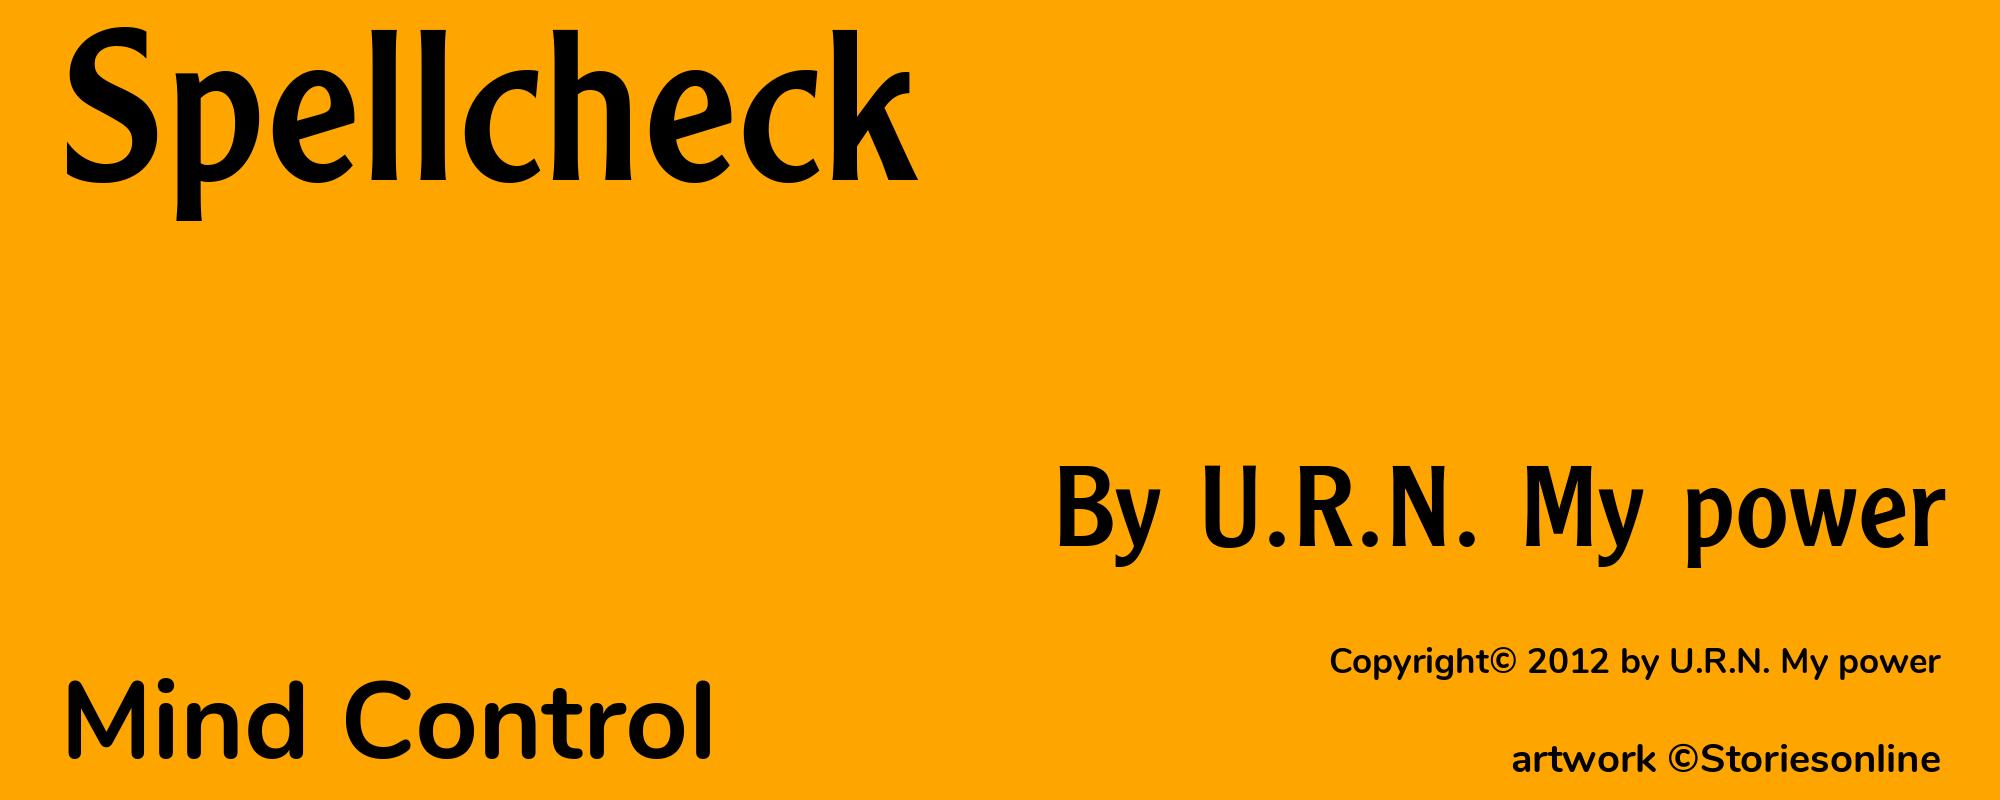 Spellcheck - Cover